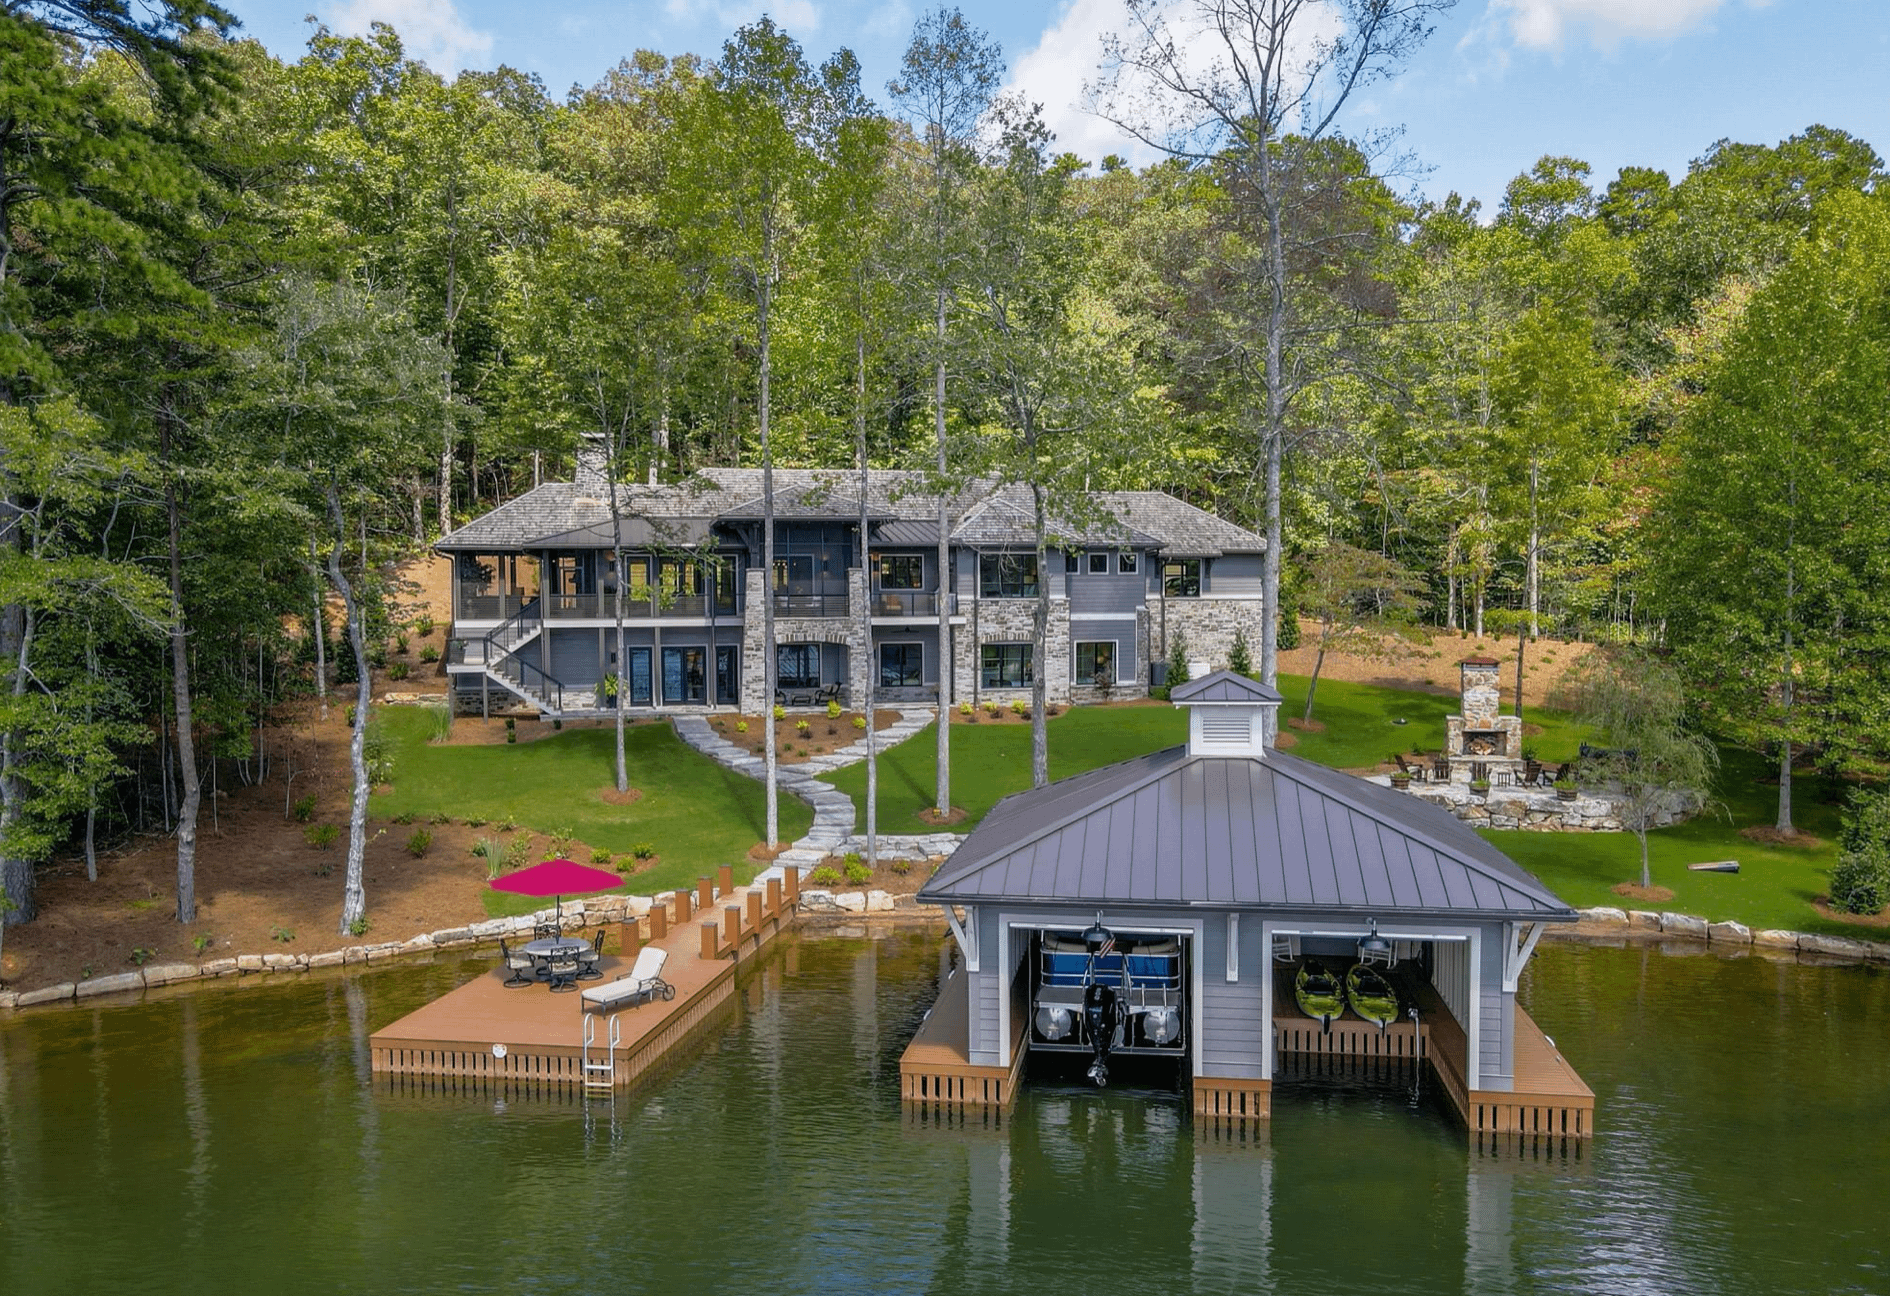  Million Lakefront Home In Clarkesville, Georgia (PHOTOS)